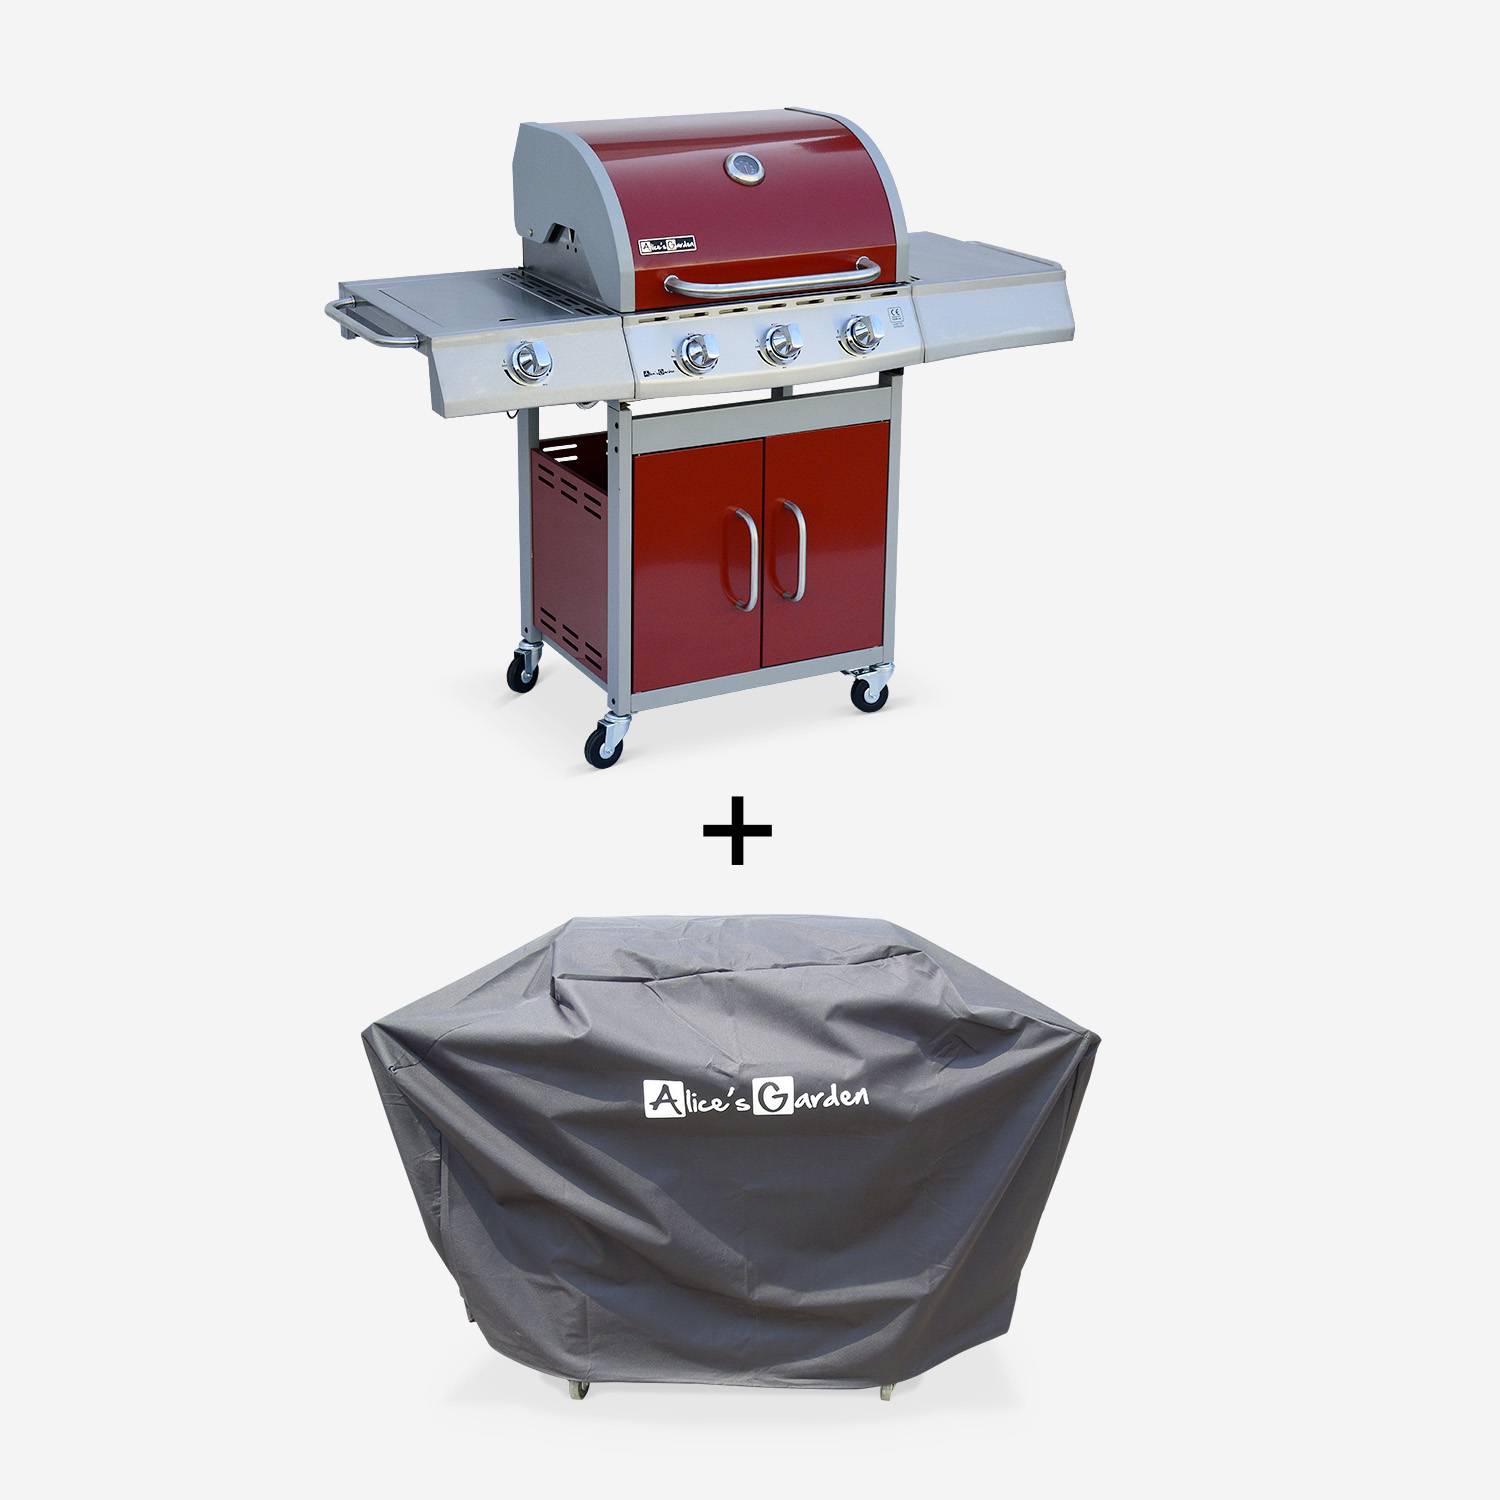 Barbecue gaz inox 14kW – Richelieu rouge – Barbecue 3 brûleurs + 1 feu latéral,grill et plancha, housse | sweeek